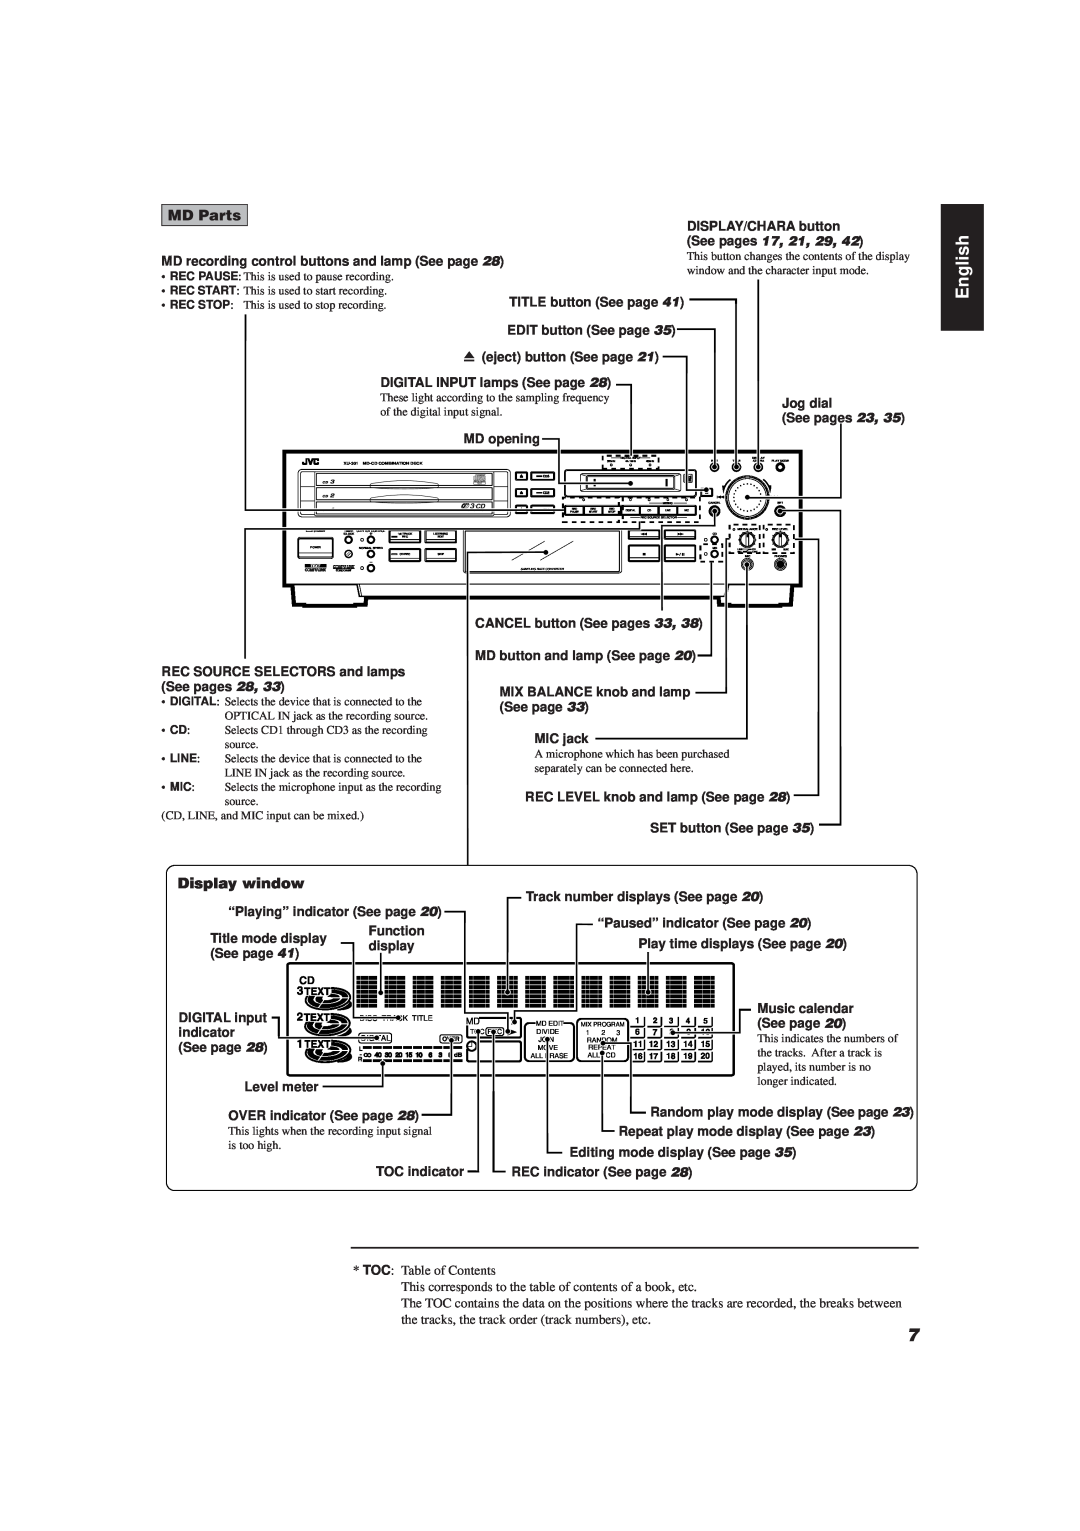 JVC XU-301 manual English, MD Parts, Display window 